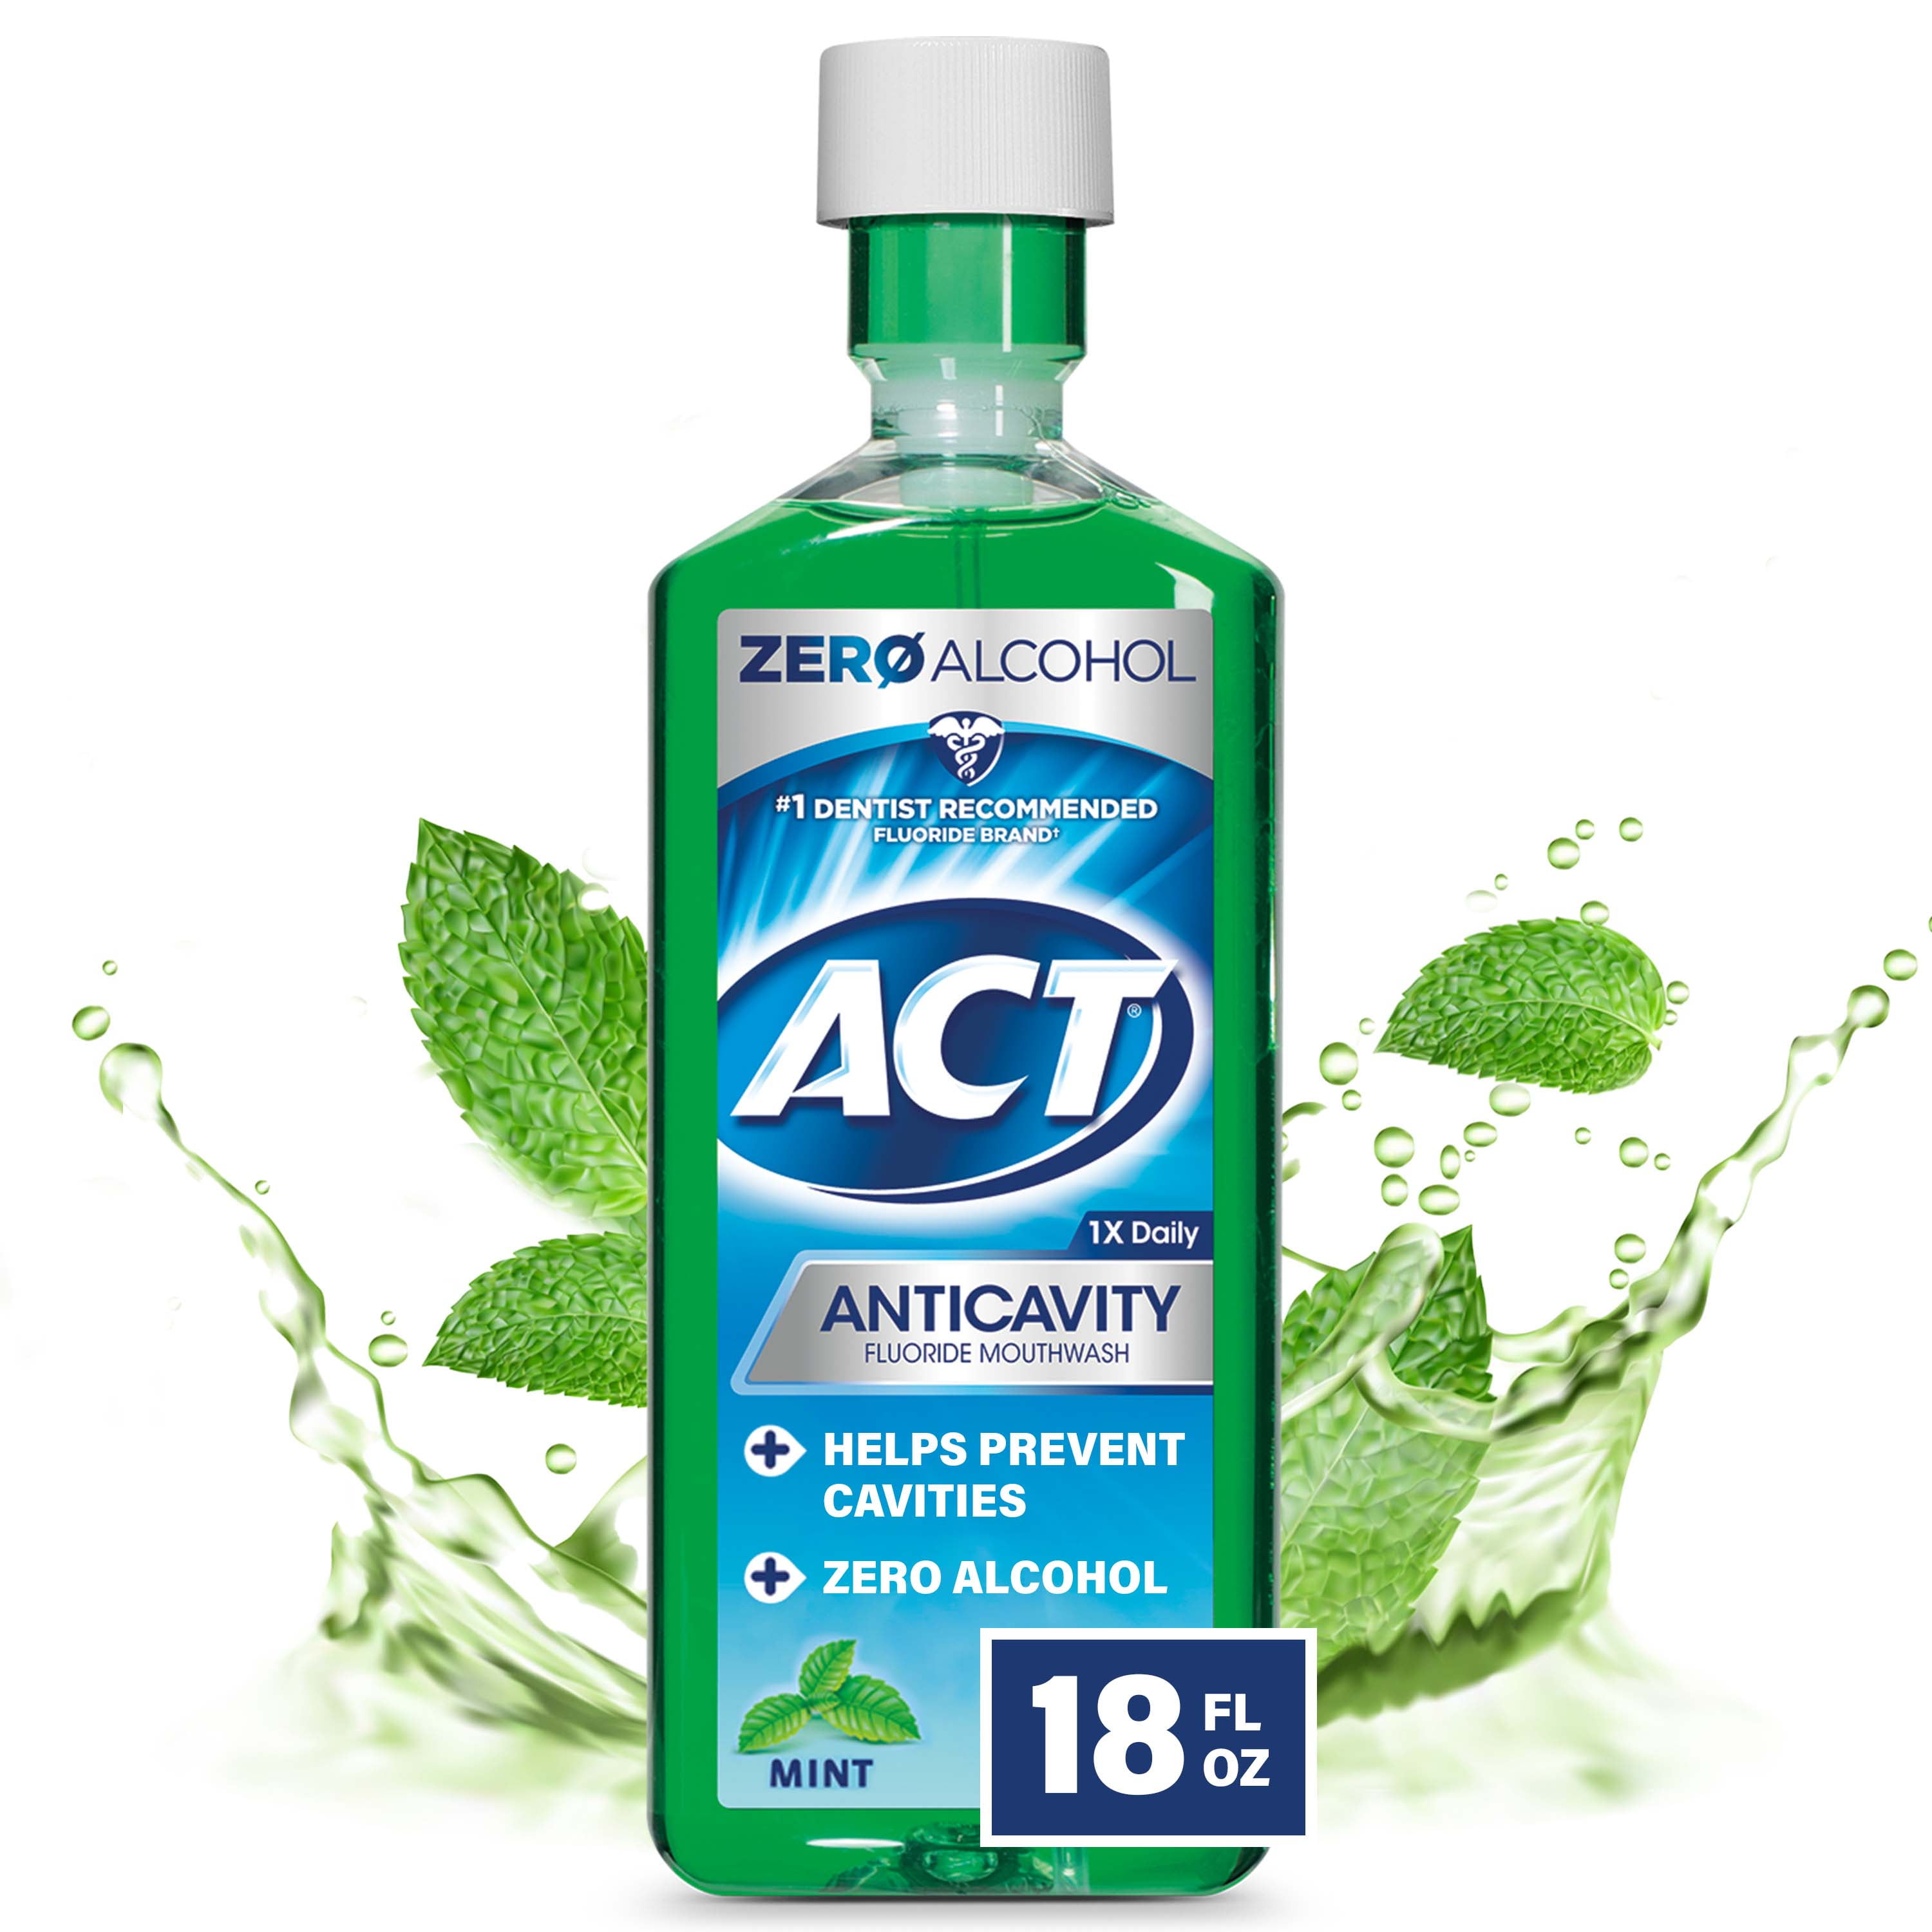 ACT Anticavity Fluoride Mouthwash With Zero Alcohol, Mint, 18 fl. oz.